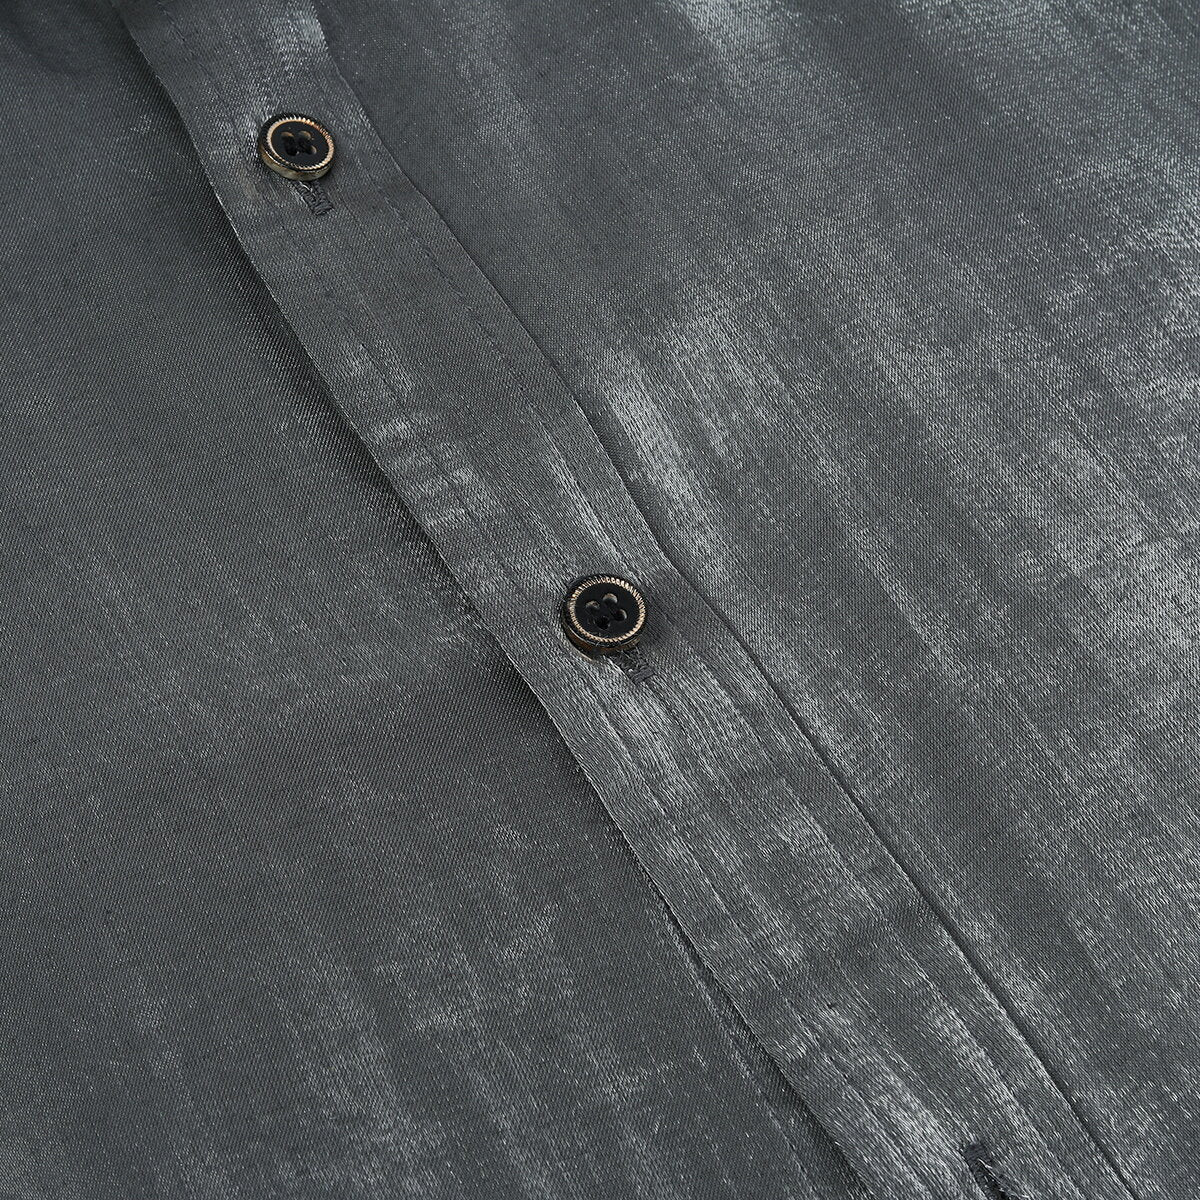 Men's Solid Color Silk Comfort Long Sleeve Shirt Grey